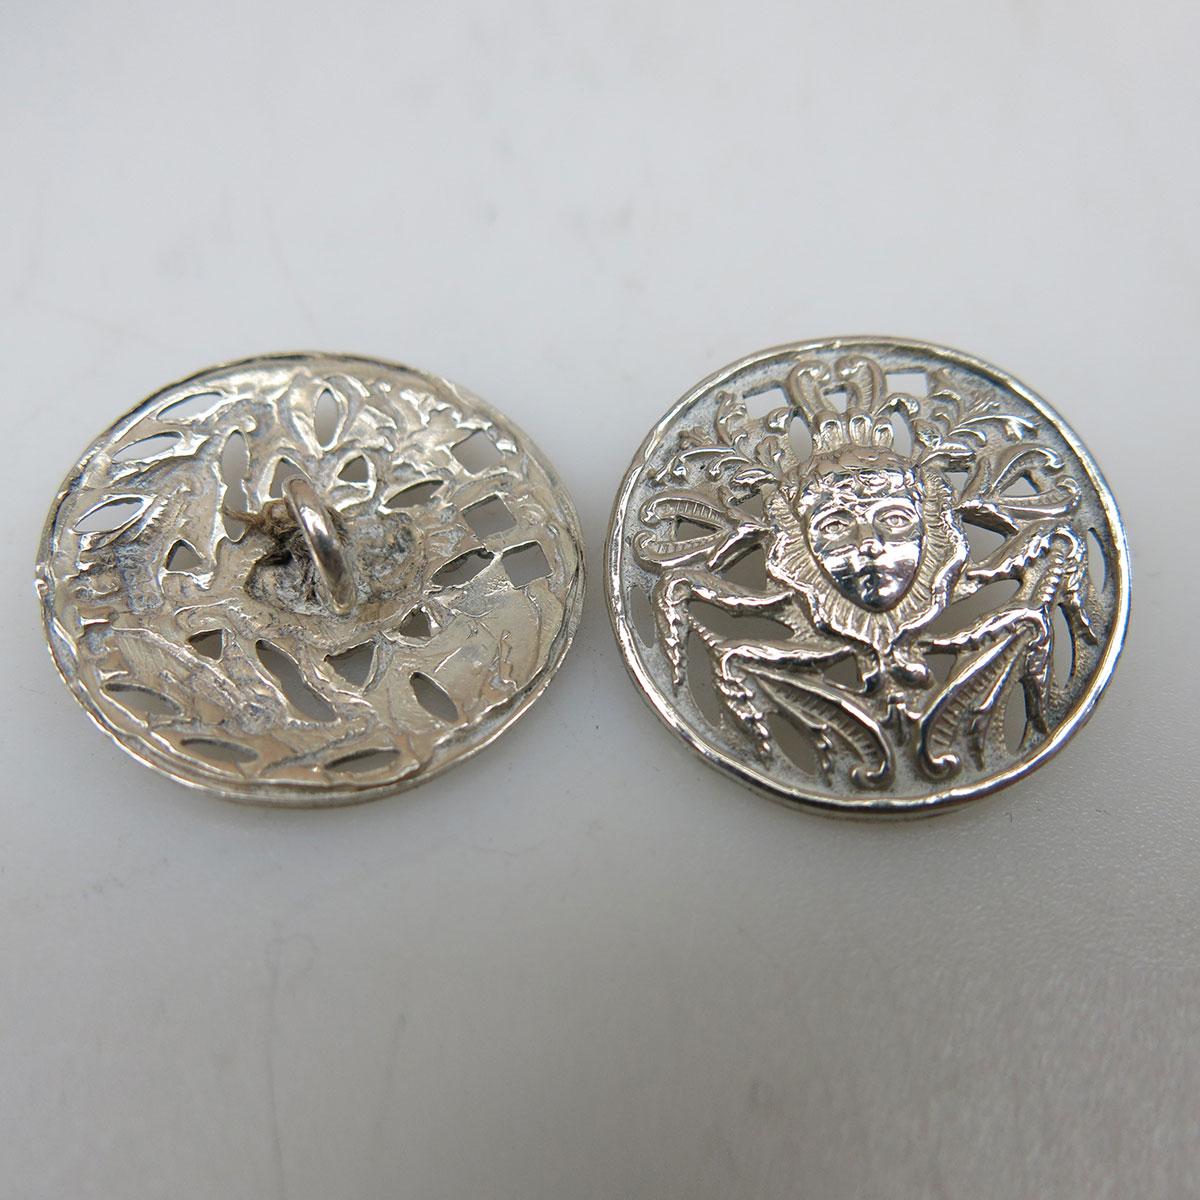 Three Levi & Salaman English Silver Art Nouveau Style Buttons,